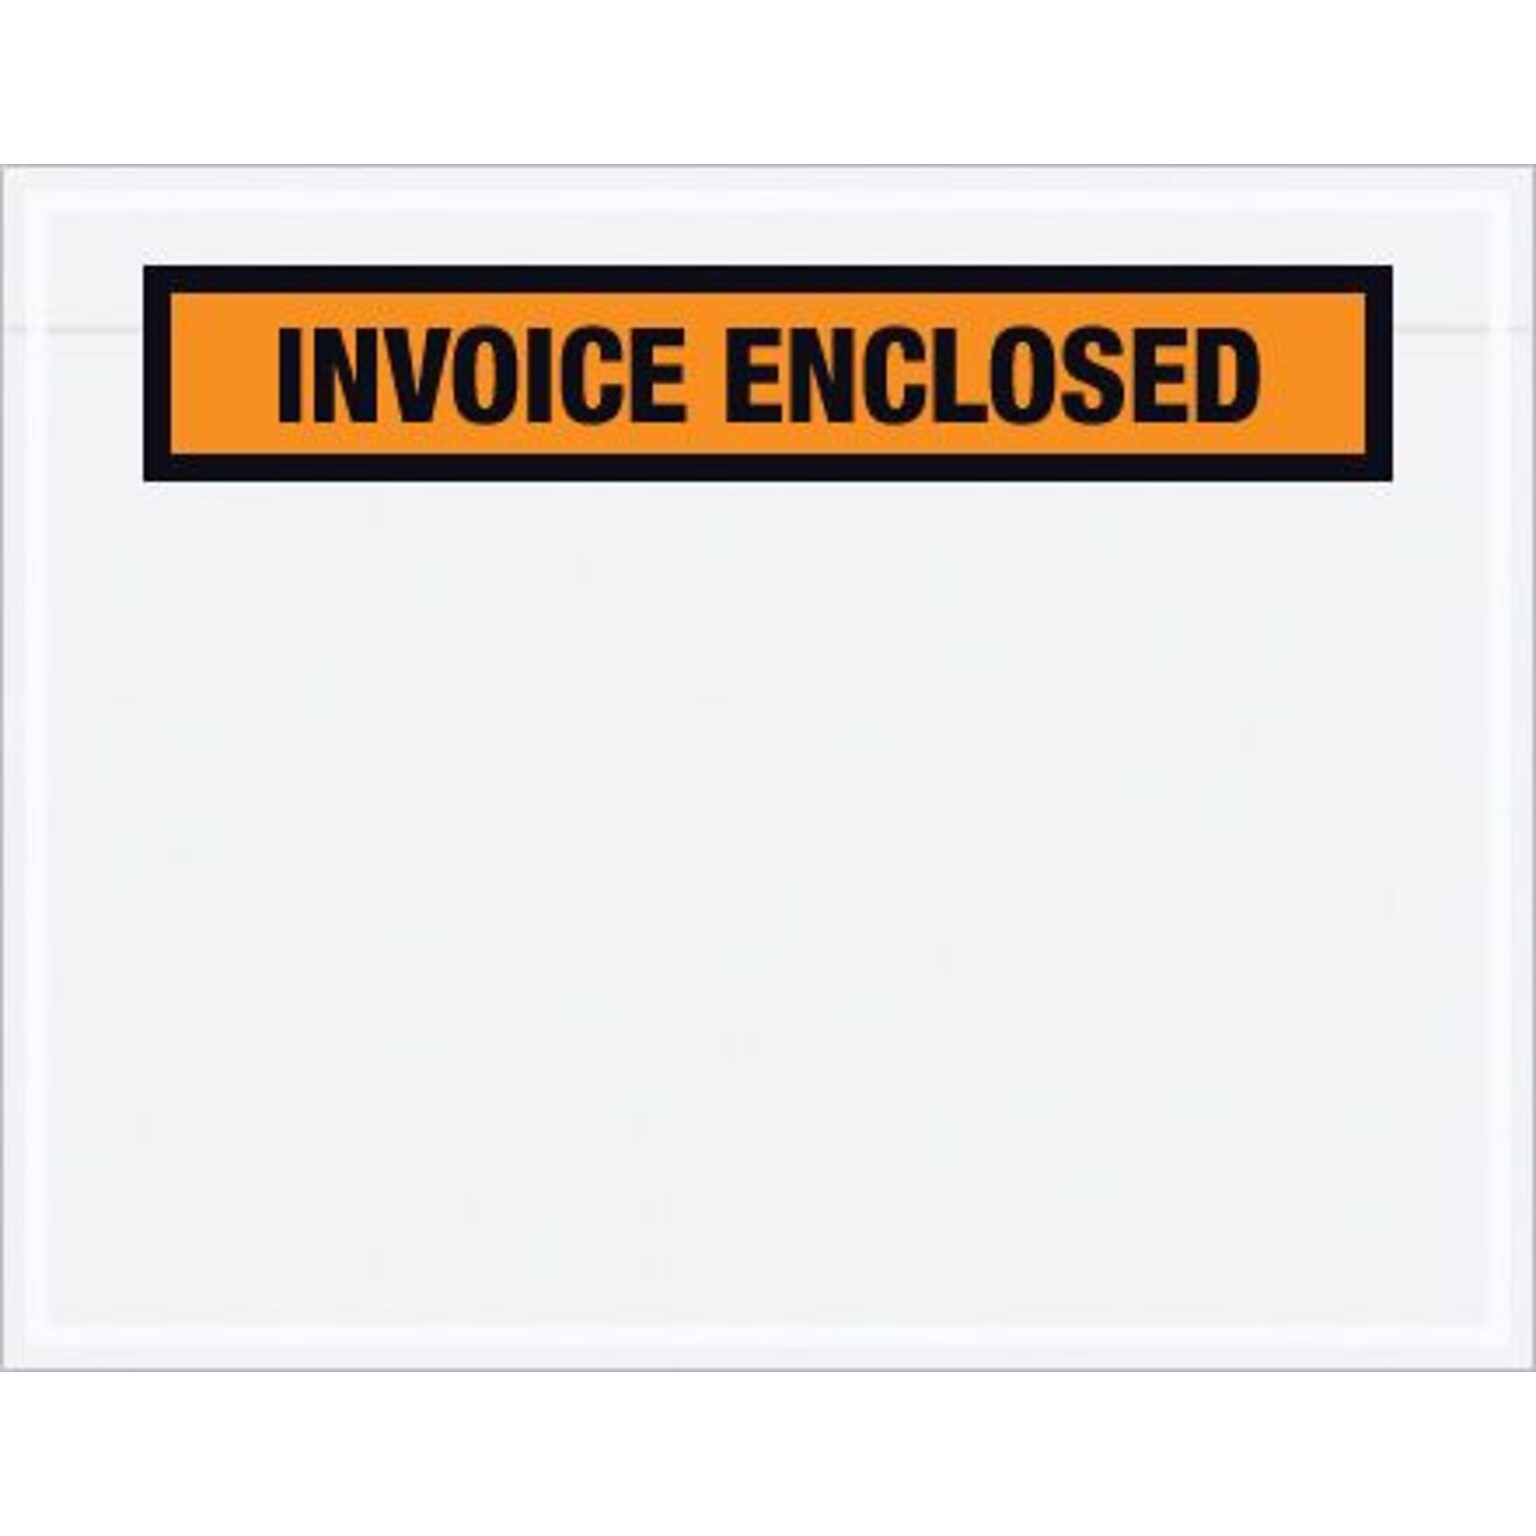 Quill Brand® Packing List Envelope, 7 x 5.5, Orange Panel Face, Invoice Enclosed, 1000/Case (PL23)